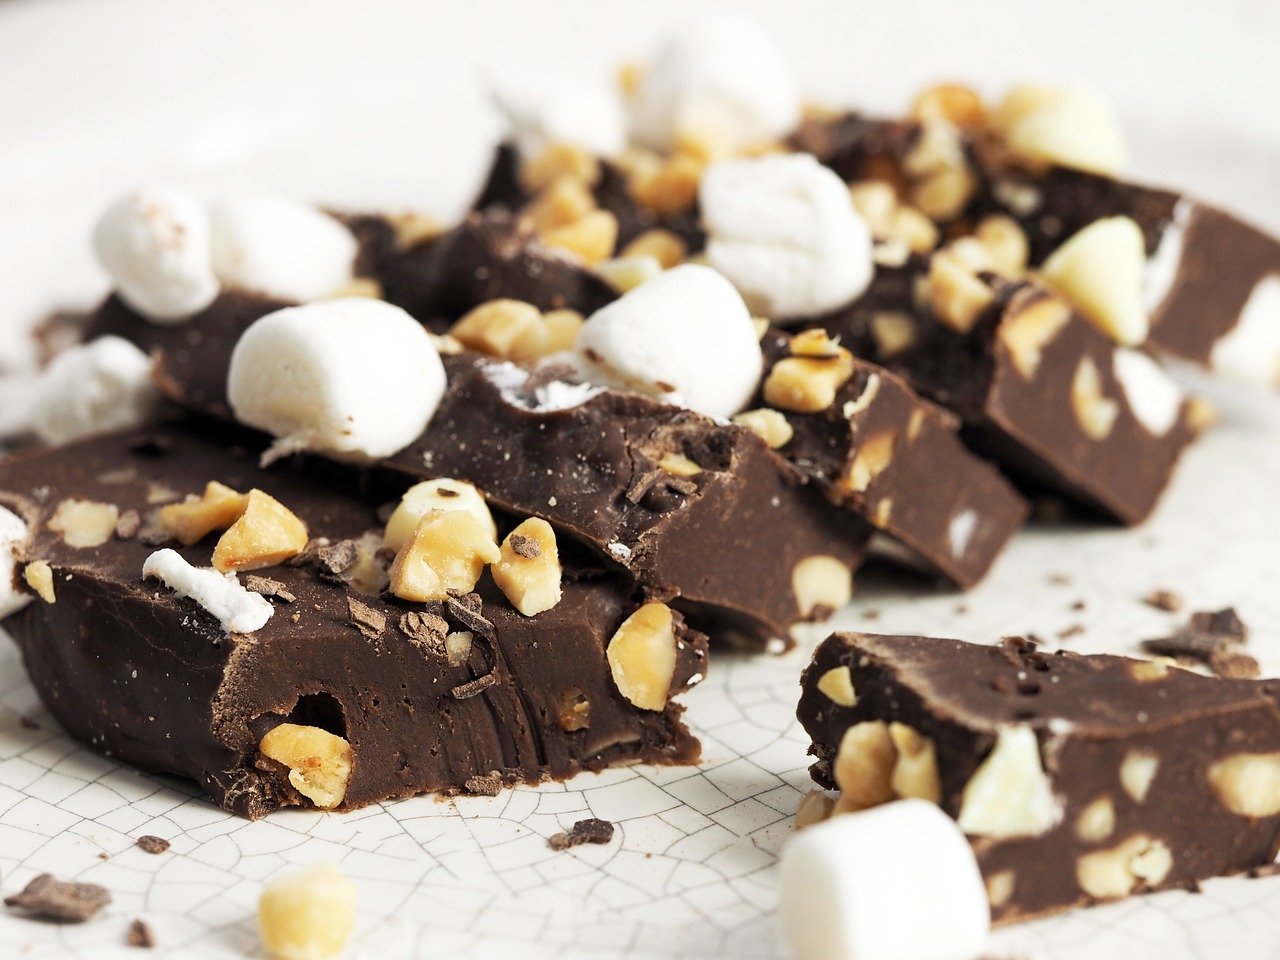 Fudge and marshmallow brownies. Image credit: Pixabay